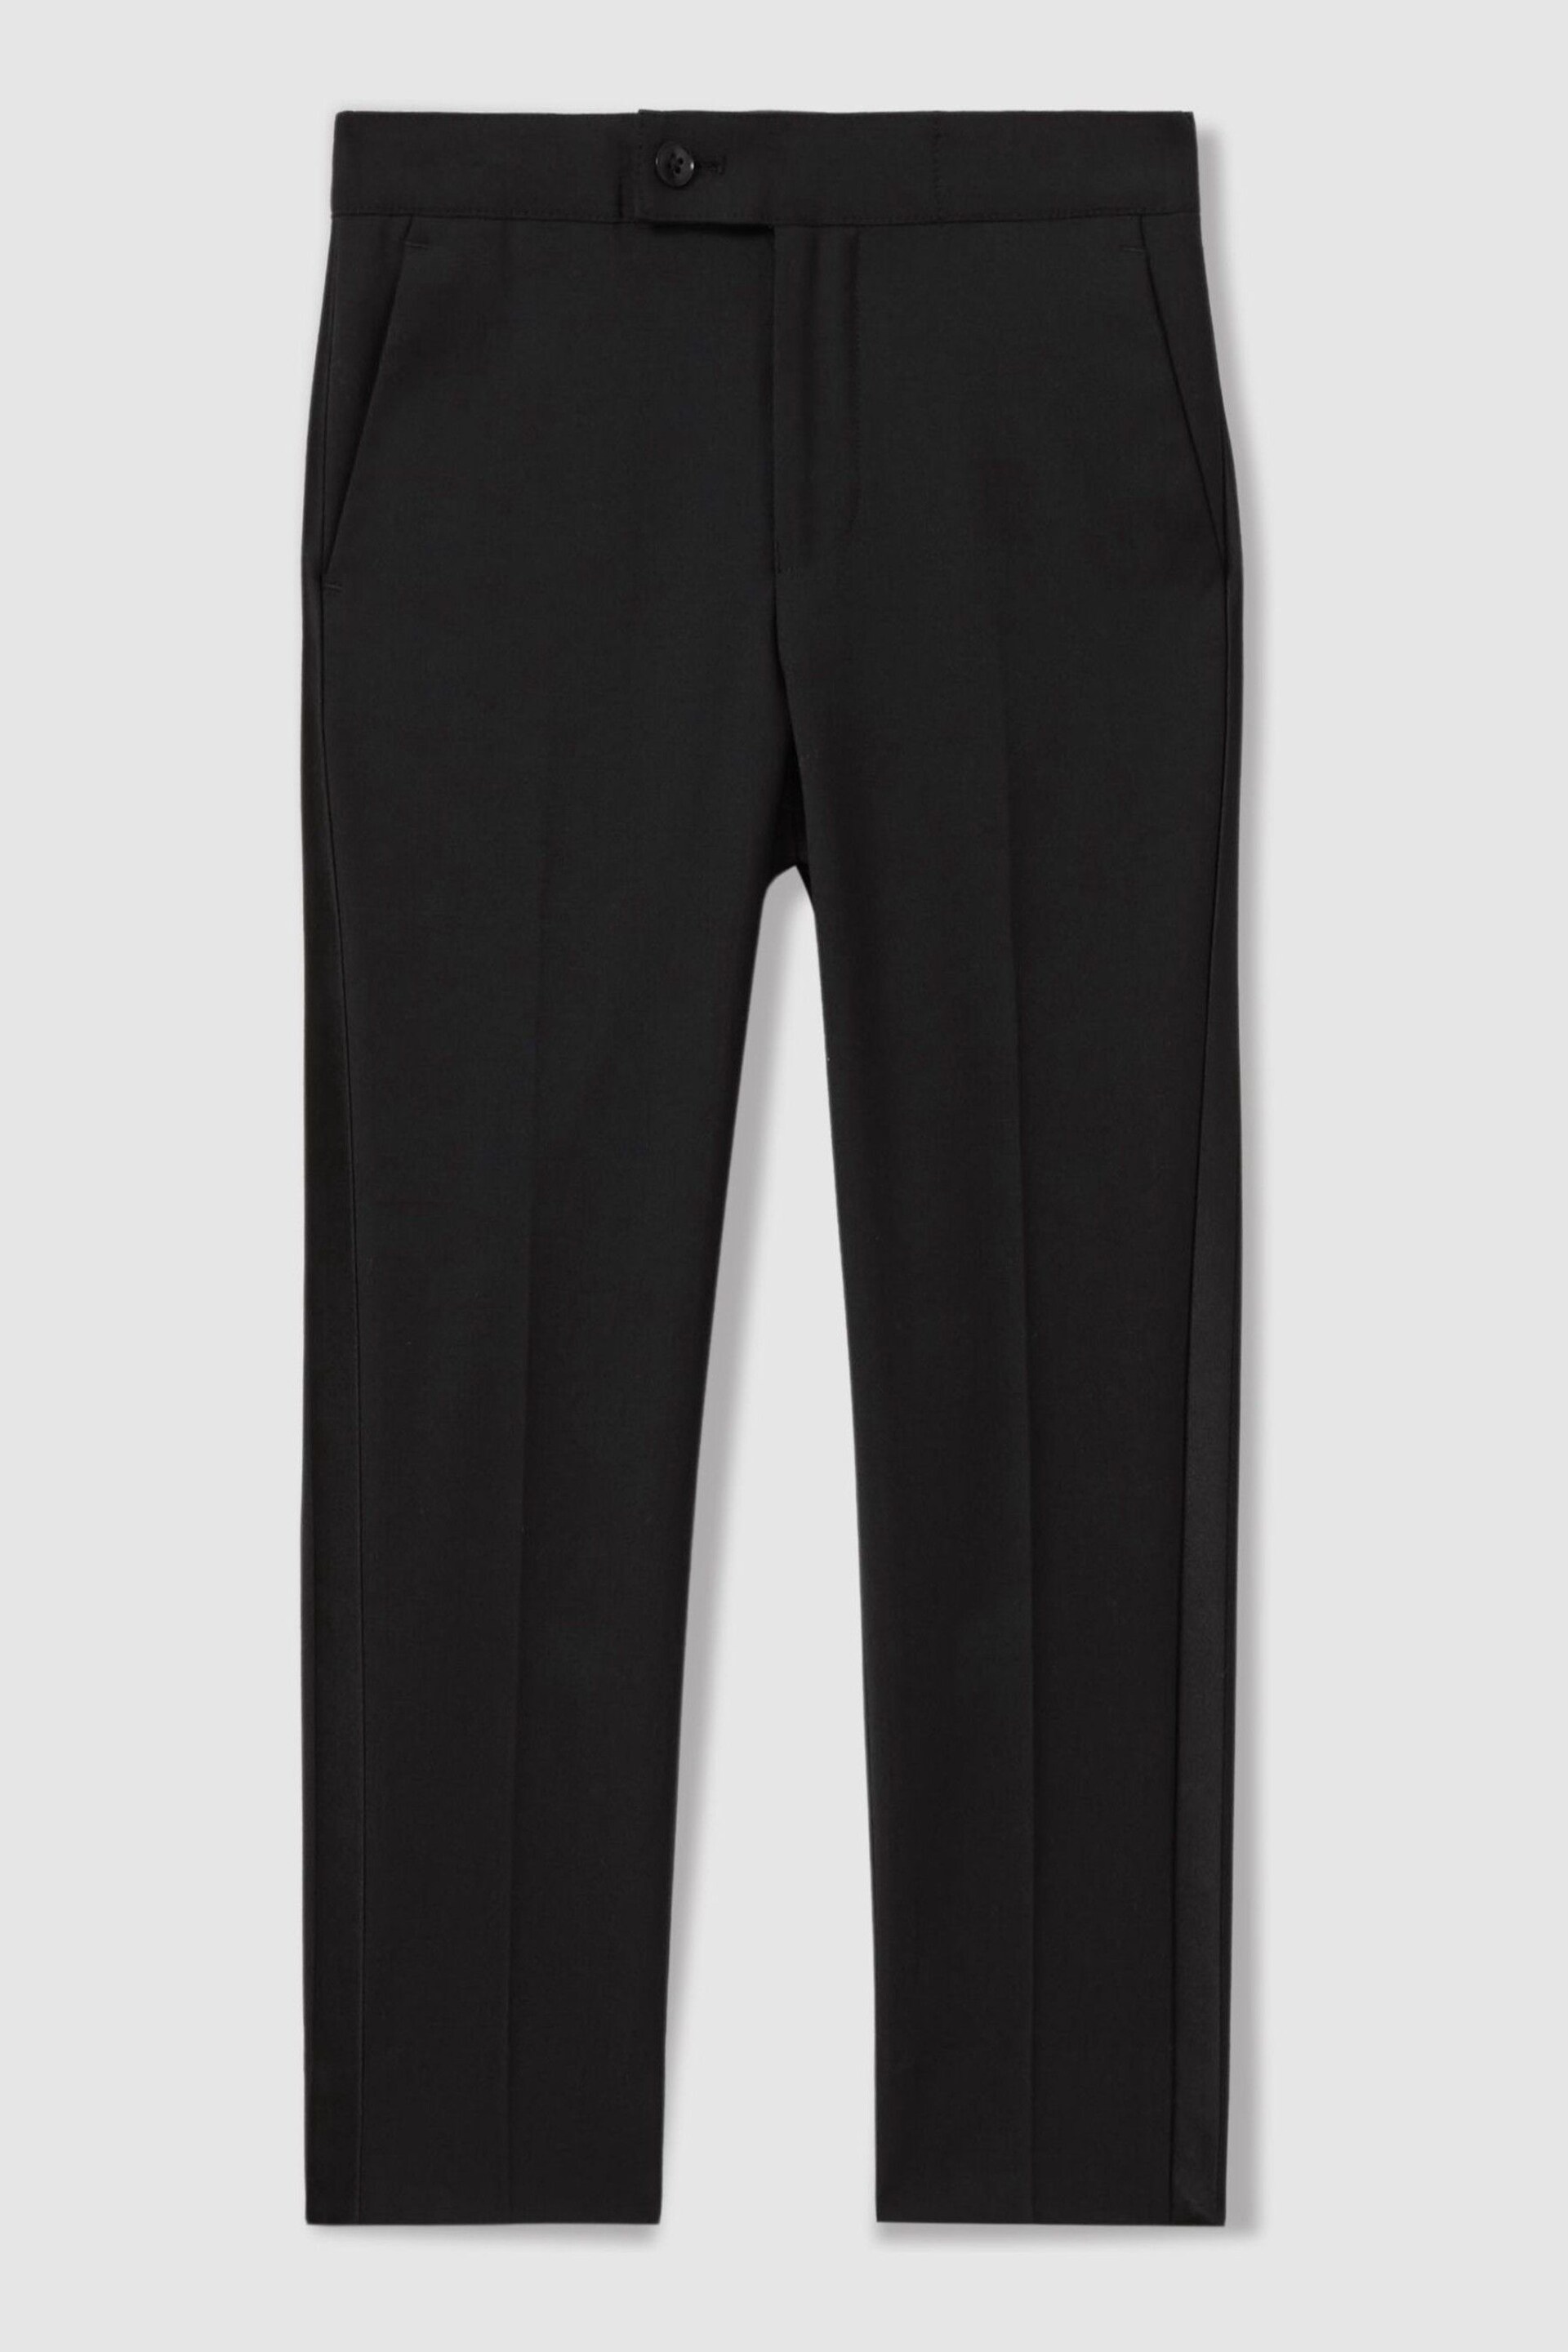 Reiss Black Knightsbridge Teen Tuxedo Trousers - Image 1 of 4